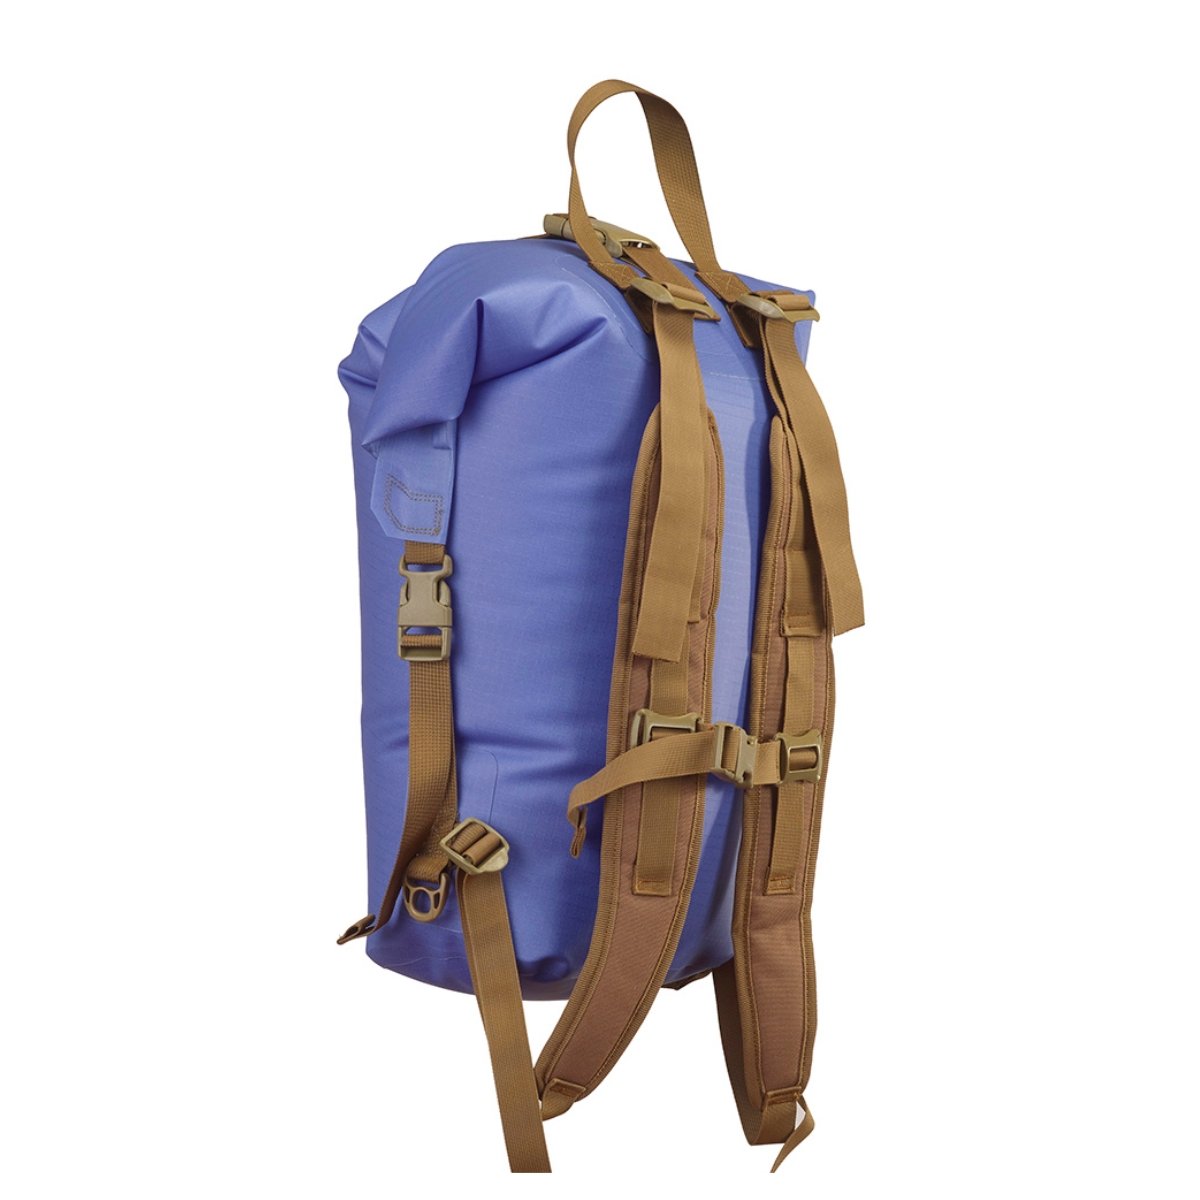 Big Creek backpack - 20 Litres - Dry Bags